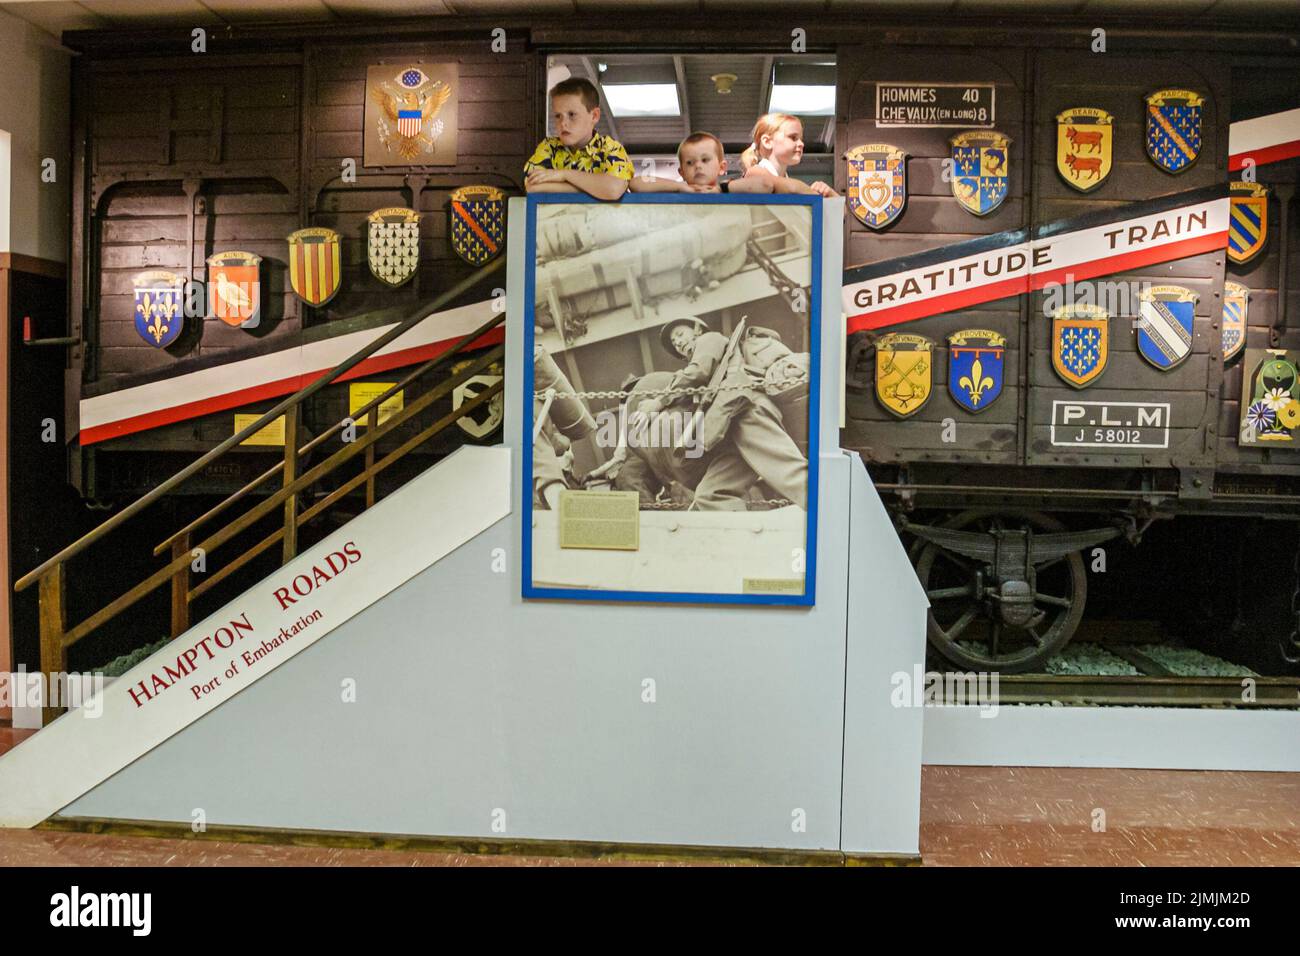 Newport News Virginia, Virginia War Museum, exposición de historia colección mostrar niña chicos gratitud tren, visitantes turismo Foto de stock